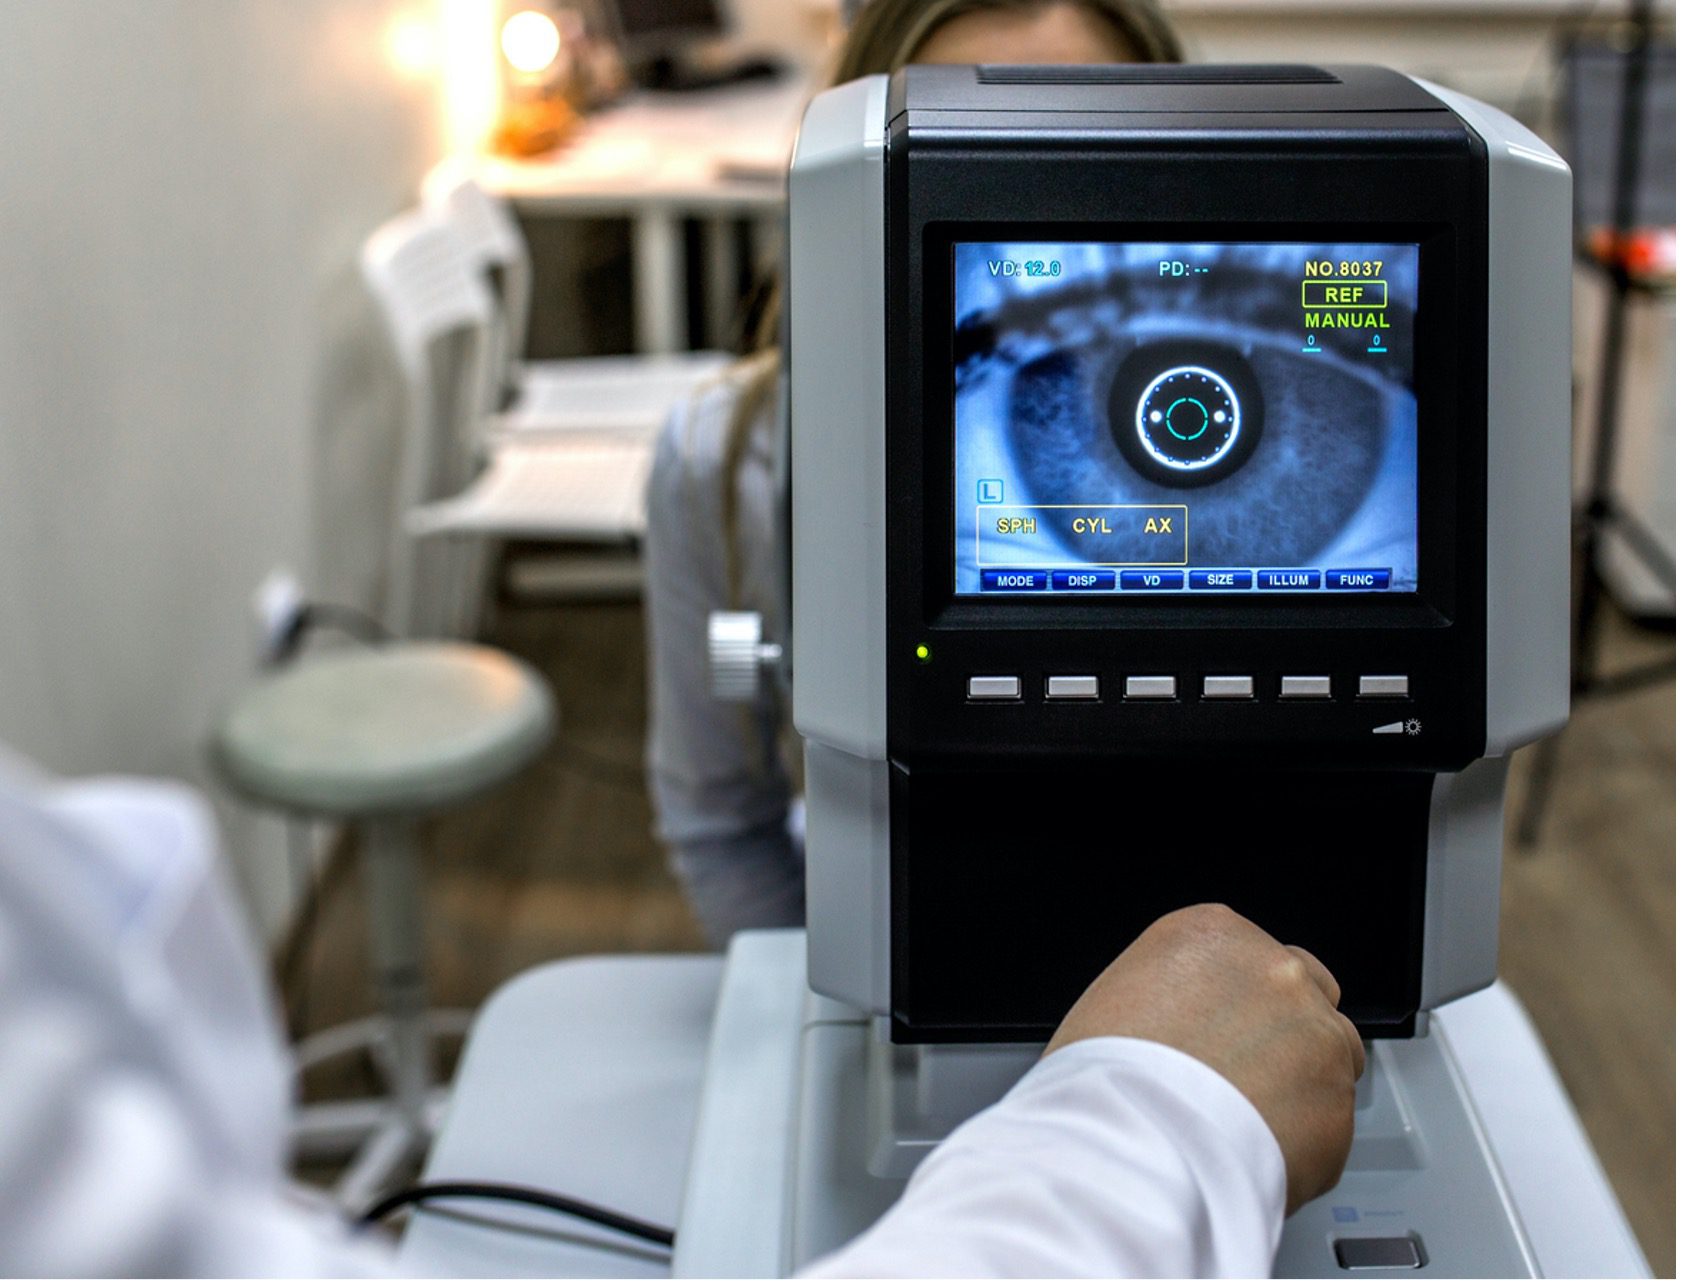 photo of eye exam equipment with doctor's hand working the equipment